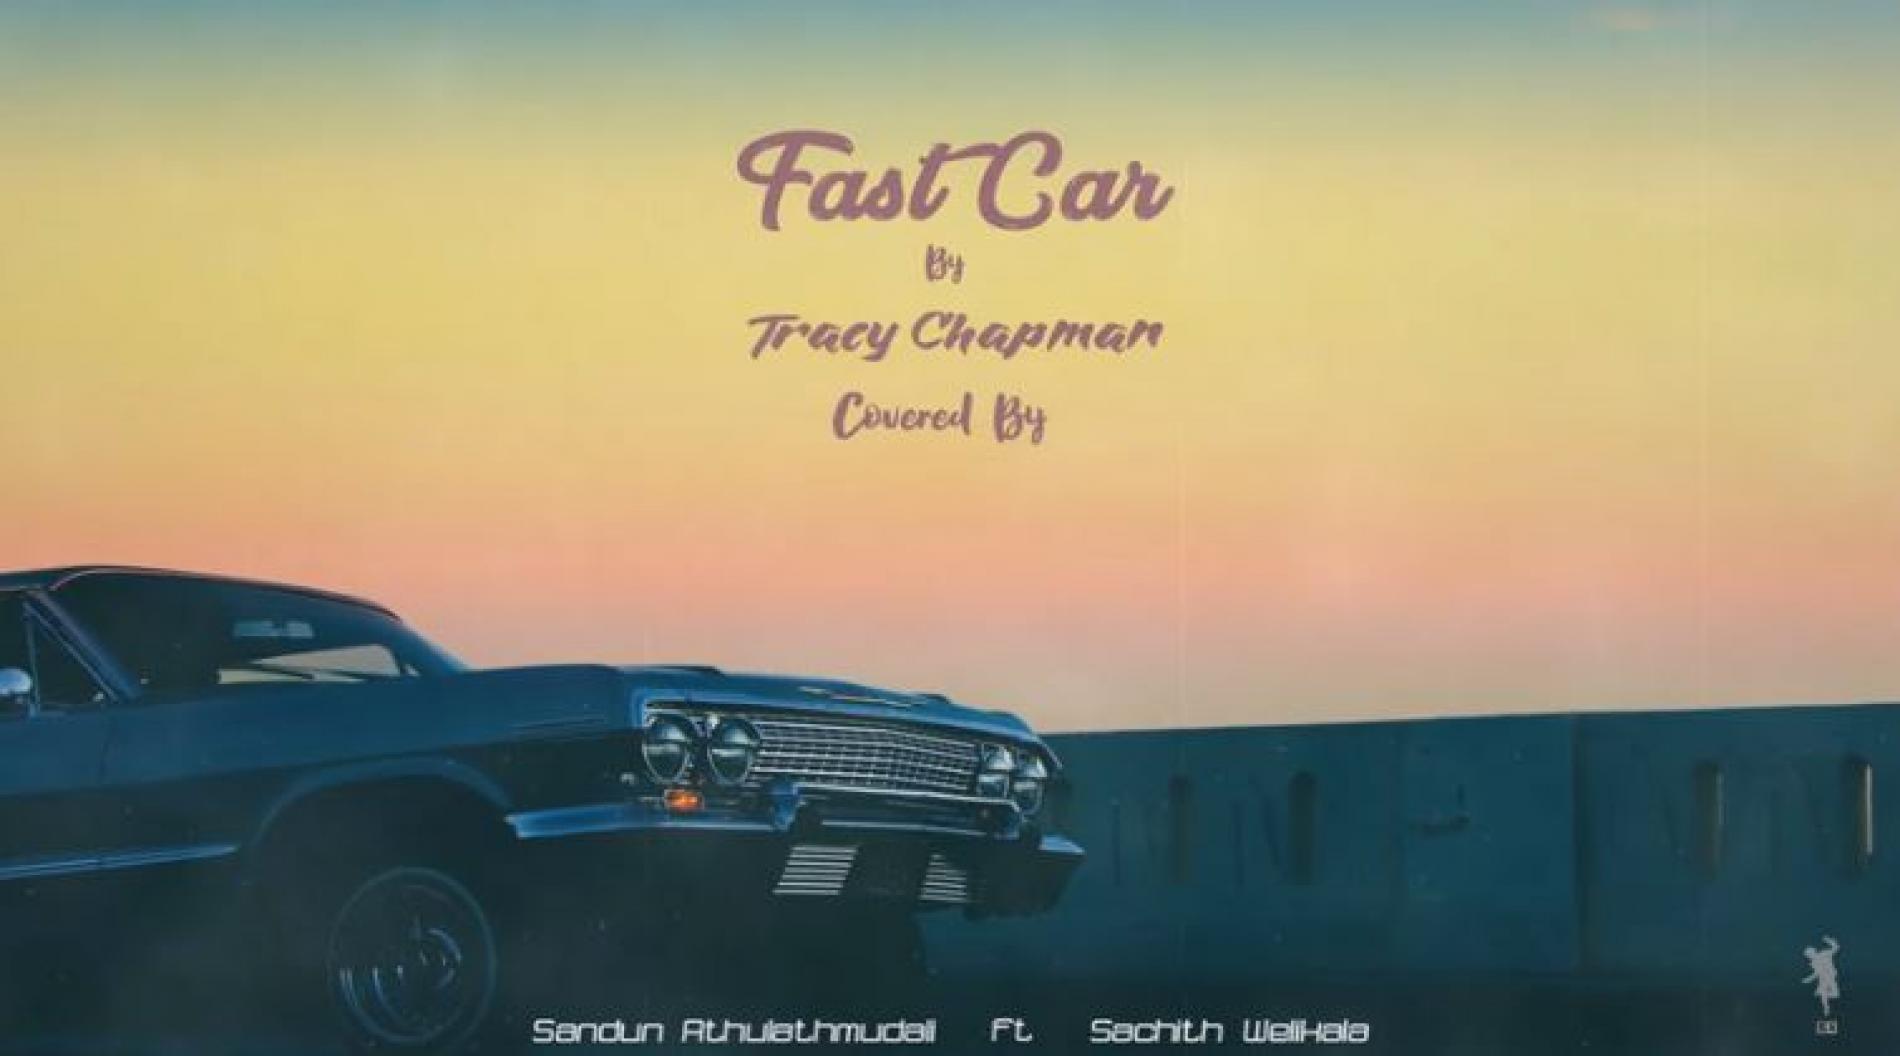 Fast Car By Tracy Chapman Covered By Sandun Athlathmudali ft Sachith Welikala